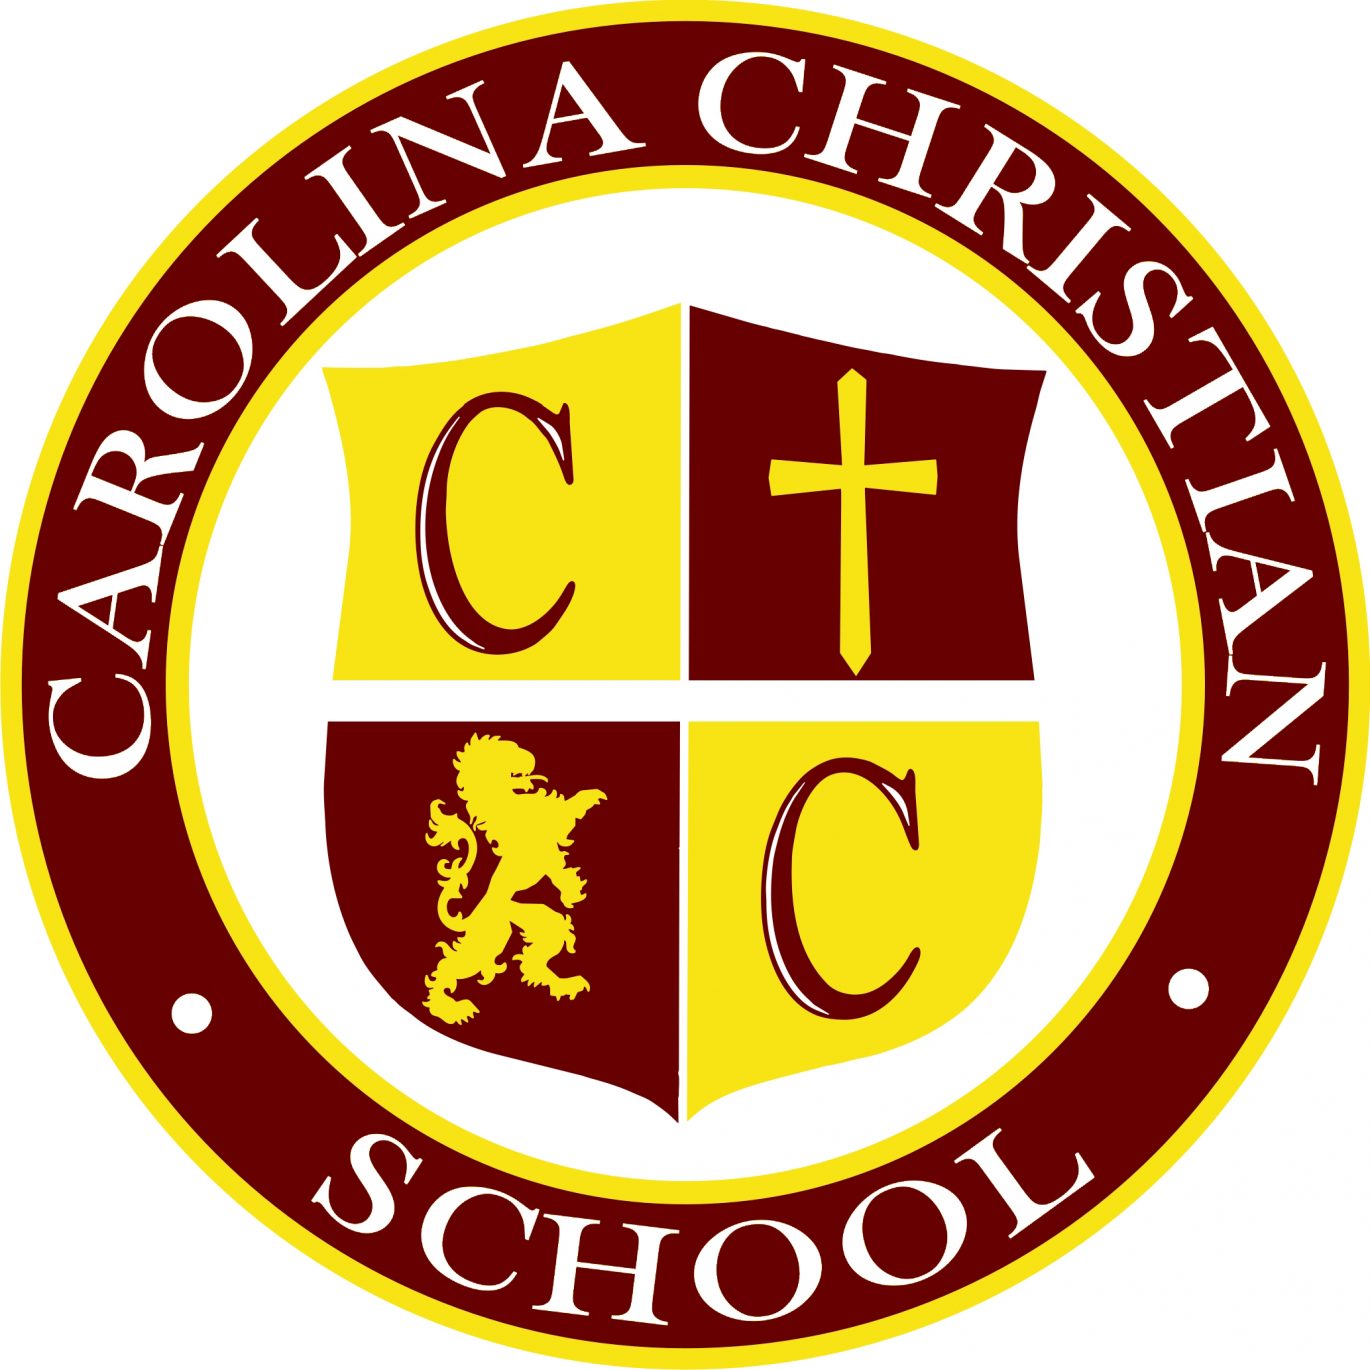 Carolina Christian School